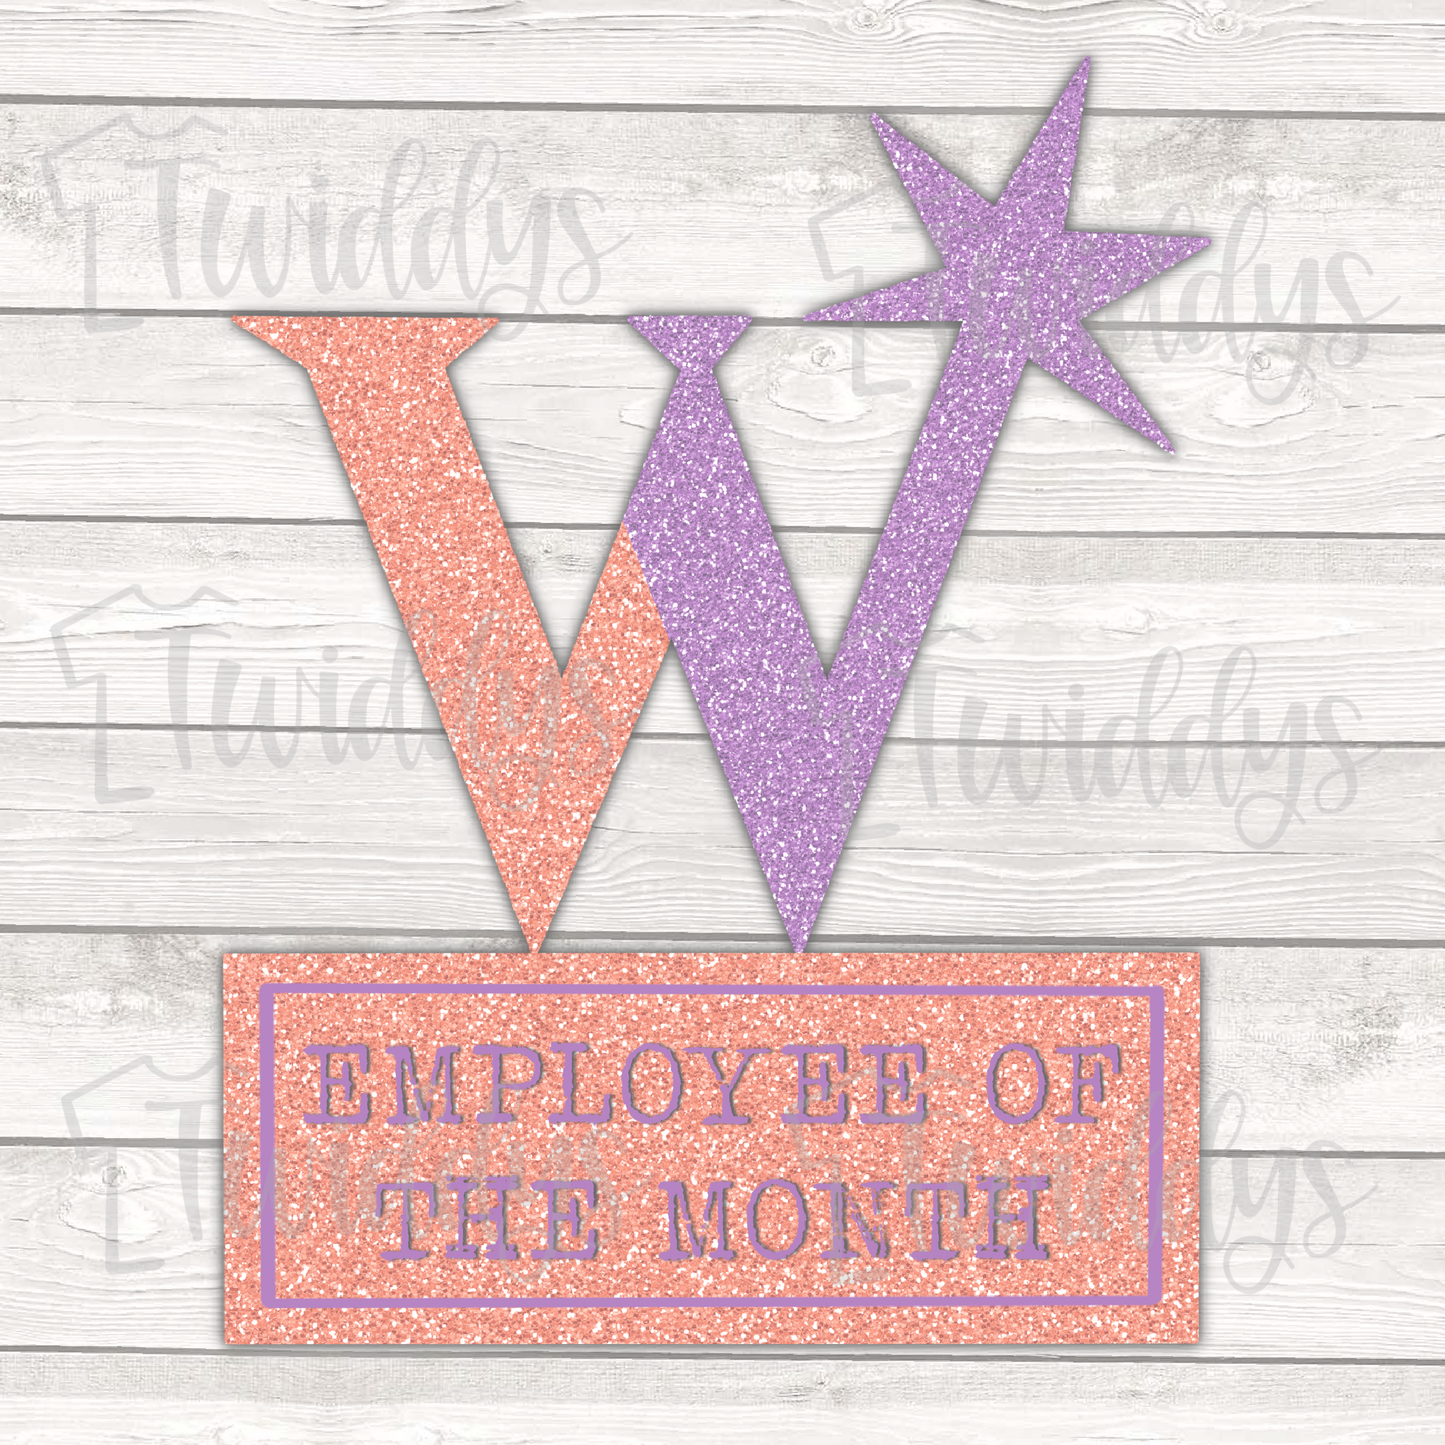 Weasley Employee of the Month Digital Download